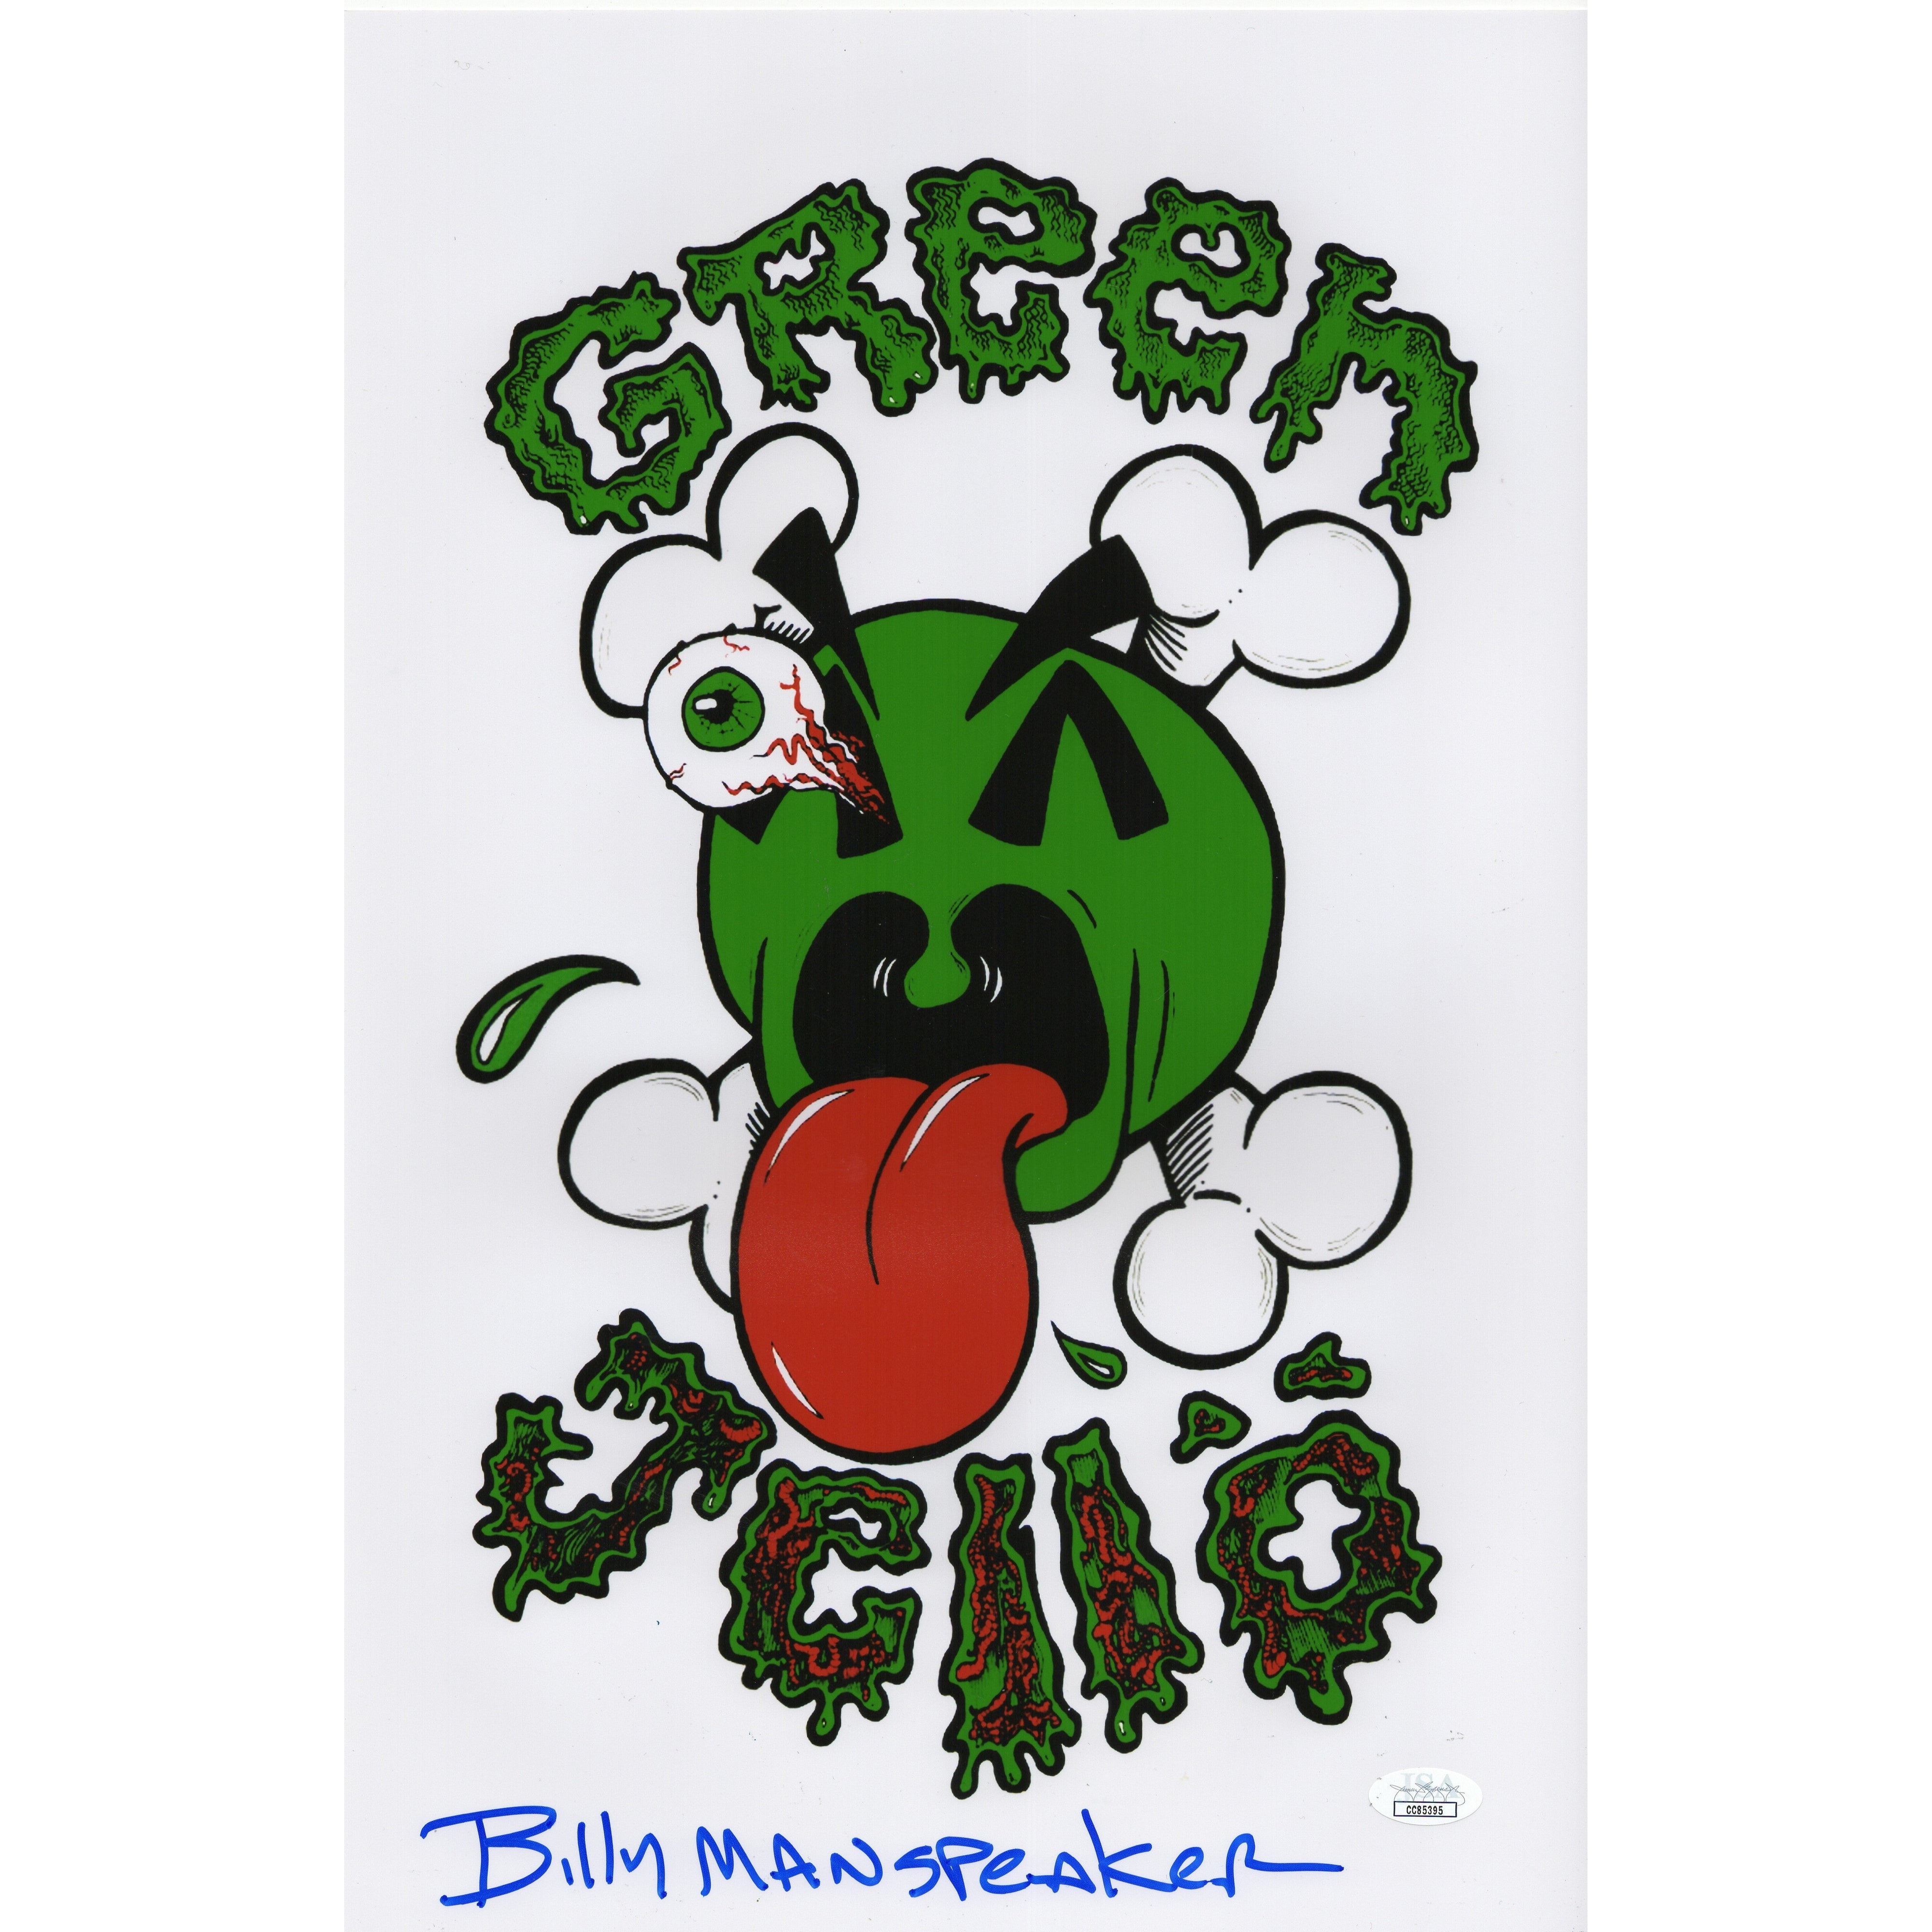 bill manspeaker green jello